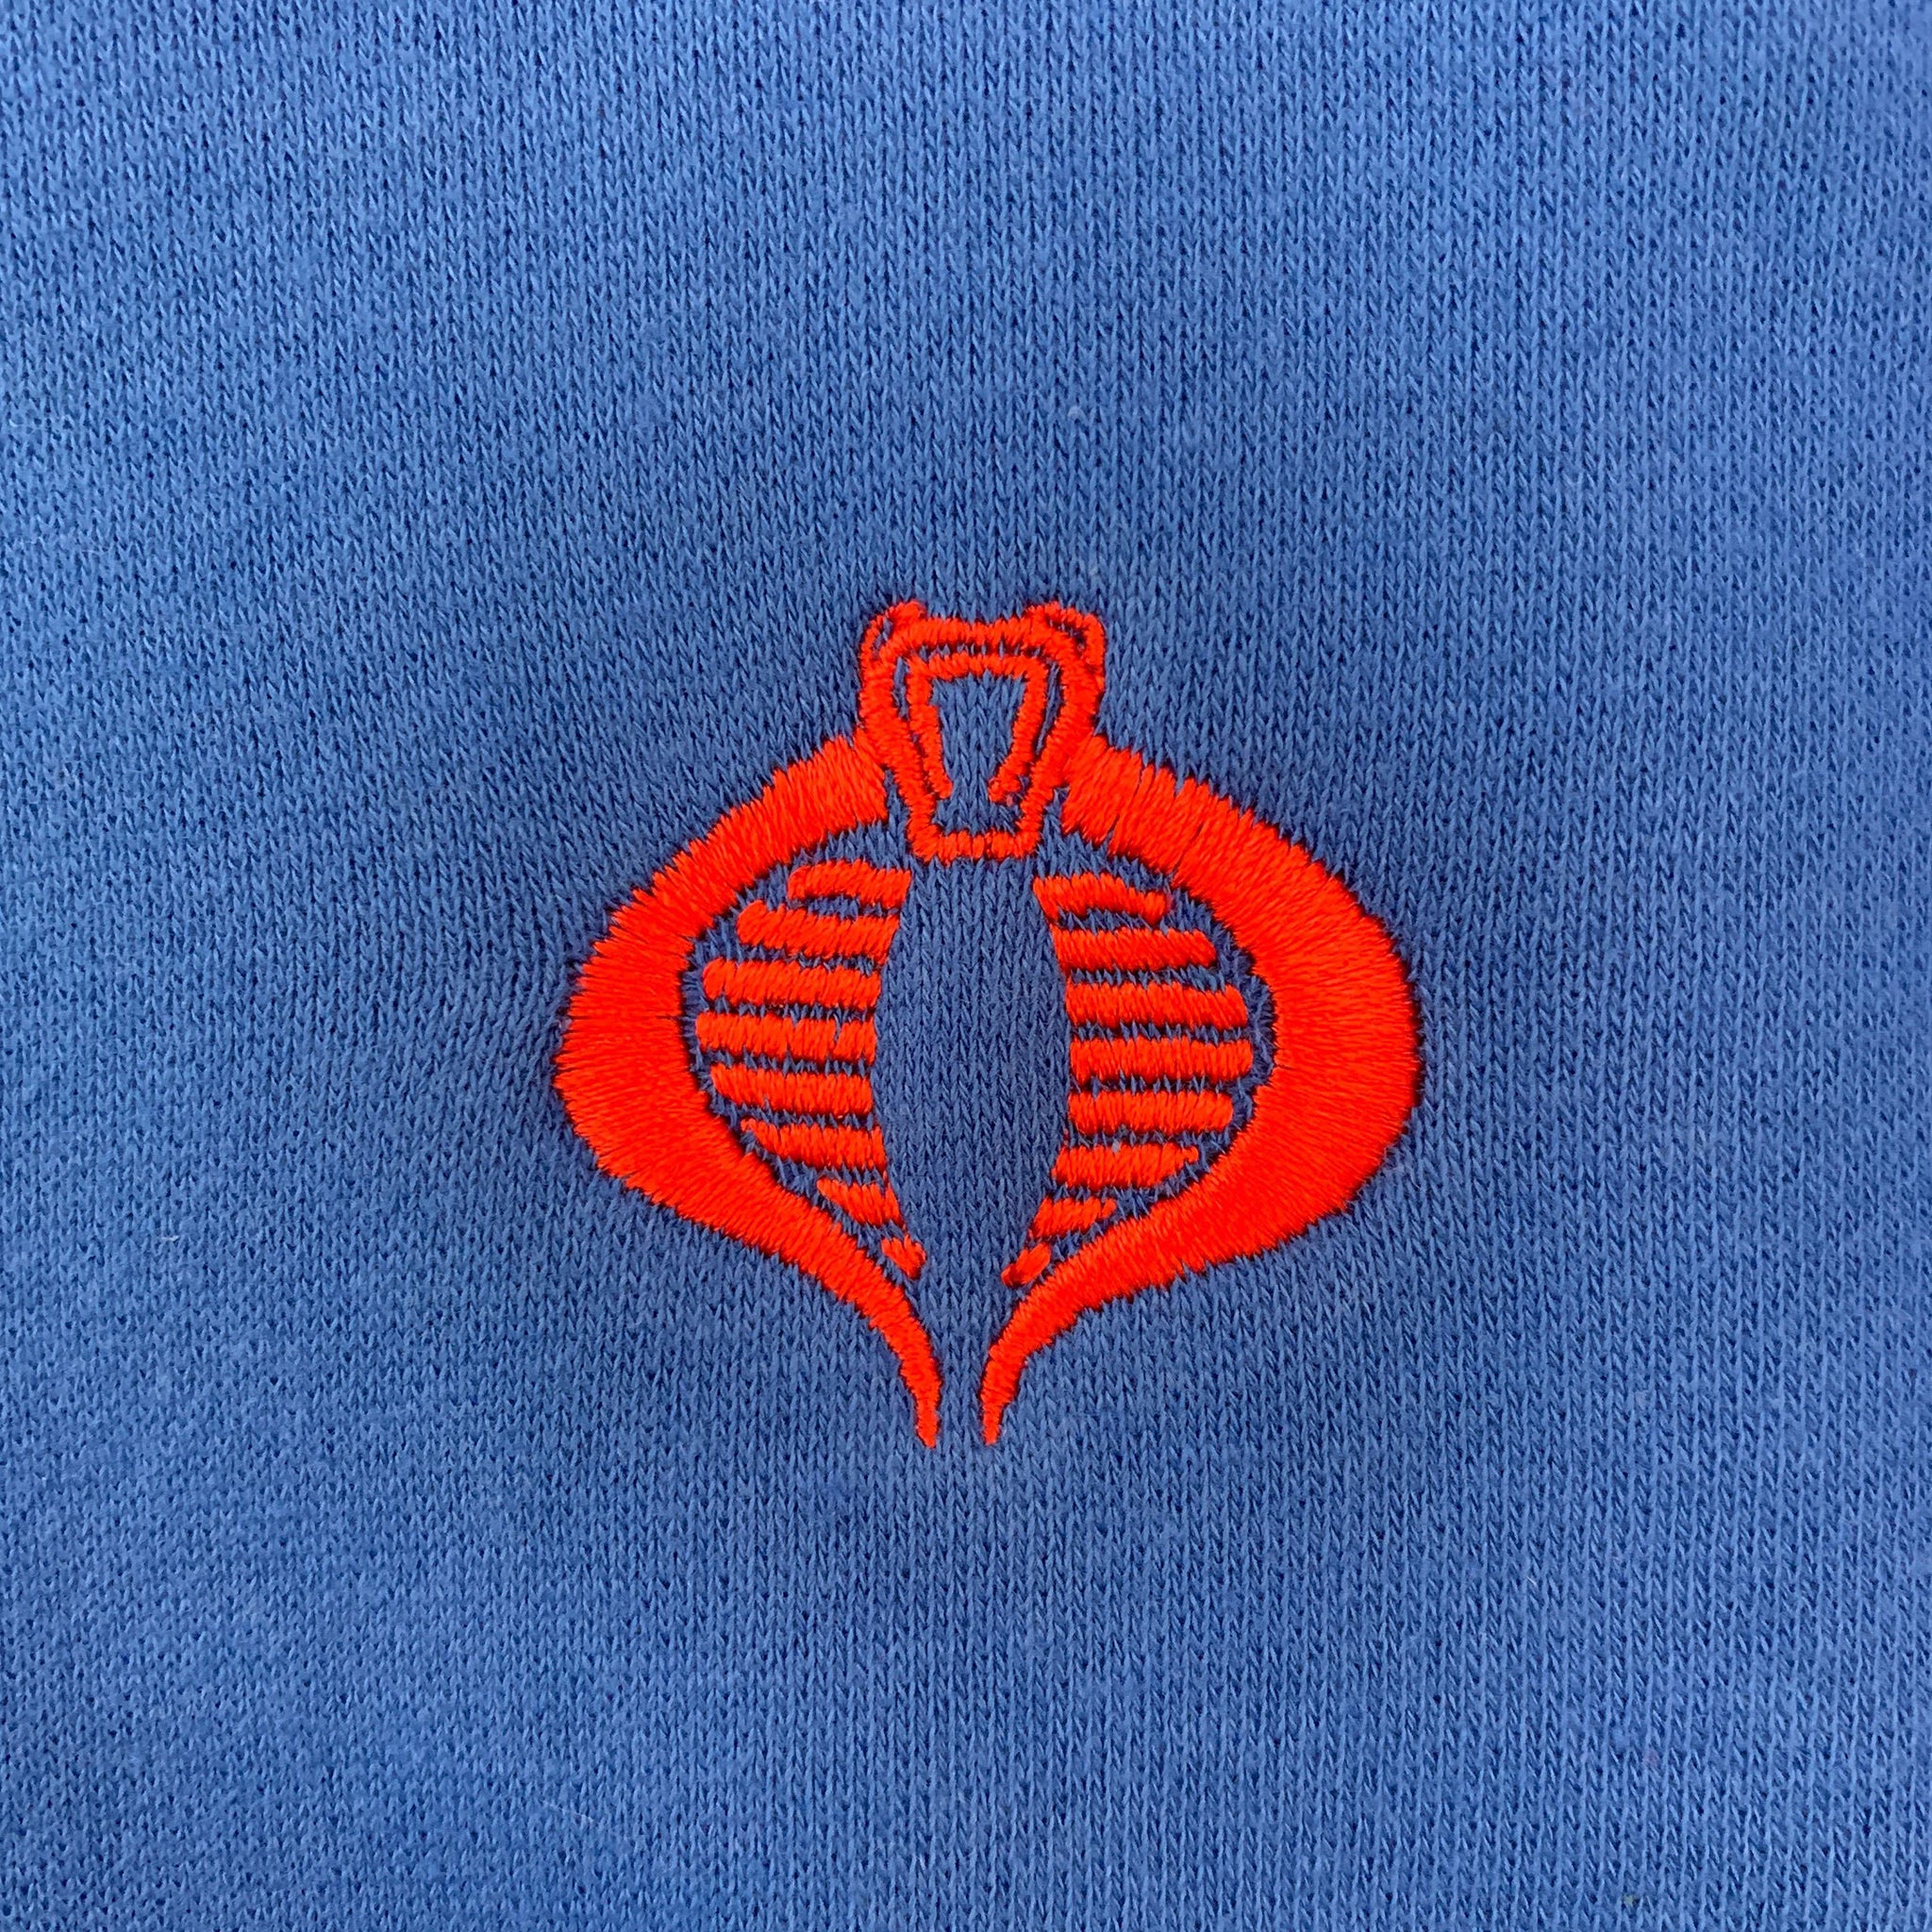 G.I. Joe - Cobra Logo Embroidered Crewneck Fleece